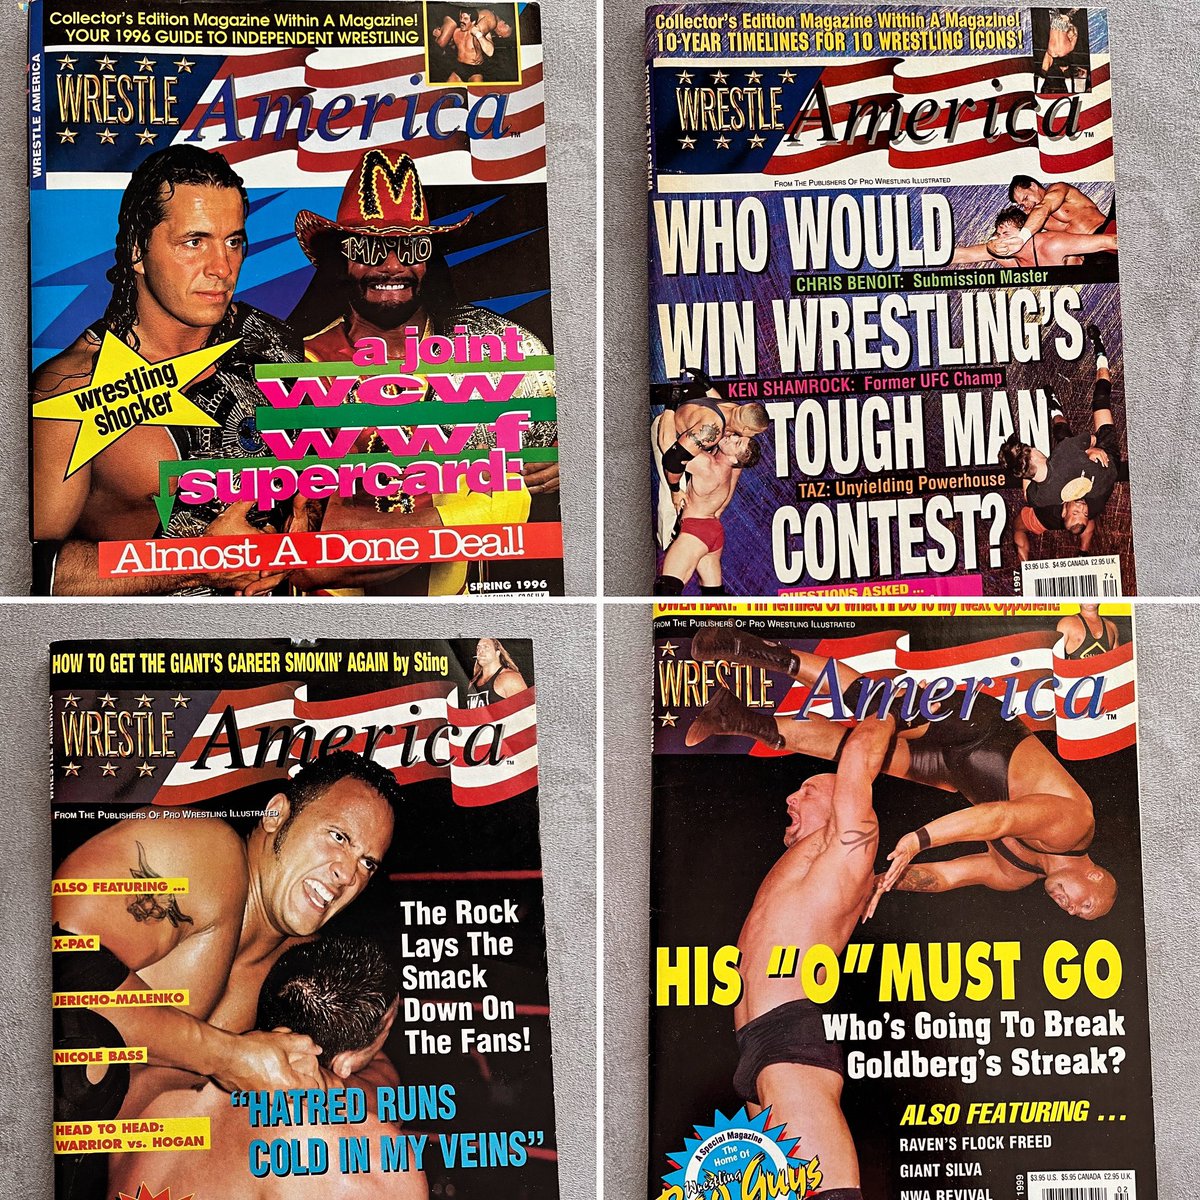 Get these classic back issues of Wrestle America magazine. Website in bio. #wrestleamerica #wrestling #wwe #vintage #wcw #wwf #wrestlingmagazines #oldschoolwrestling #oldschoolwrestlingmagazines #90swrestling #therock #goldberg #brethart #randysavage